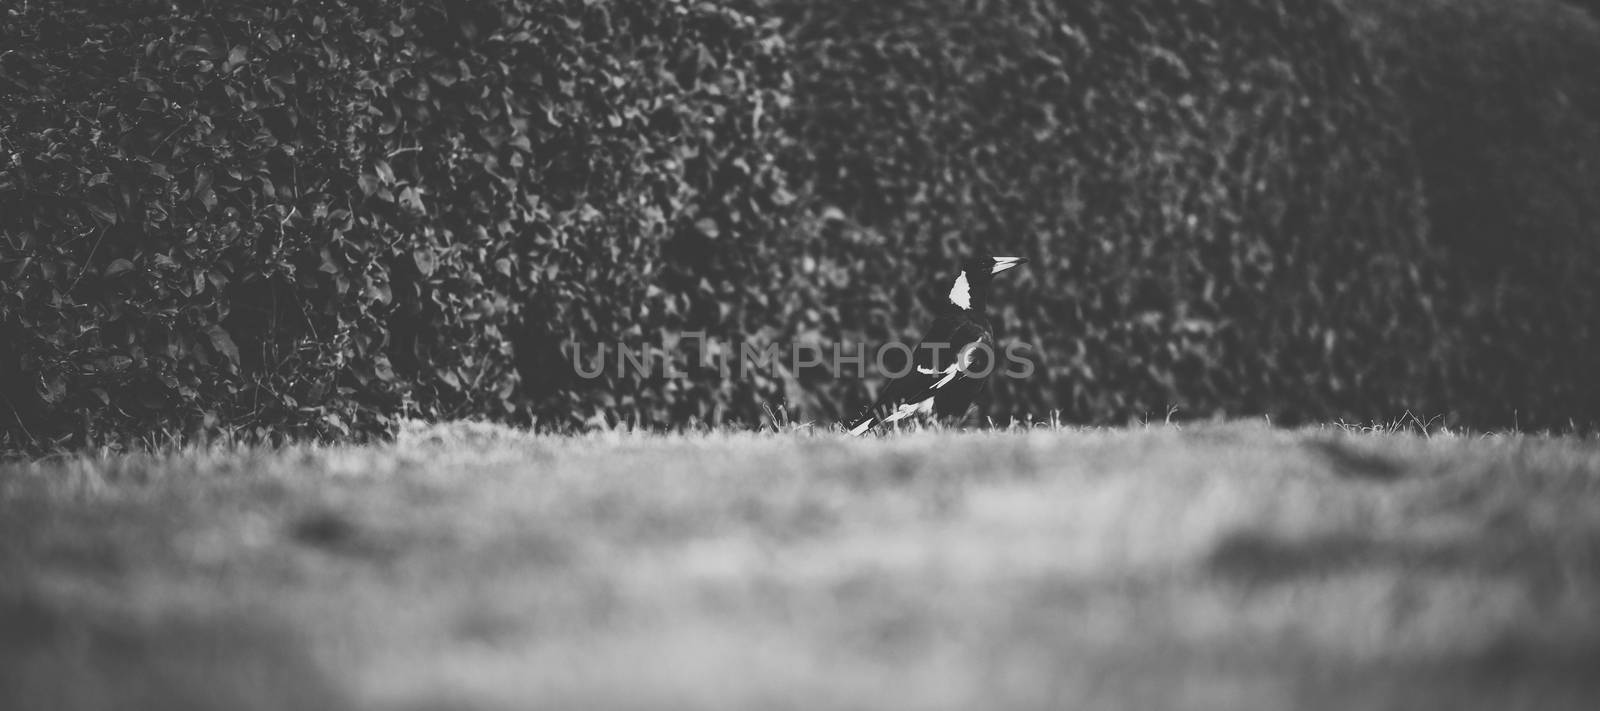 Australian magpie outdoors by artistrobd